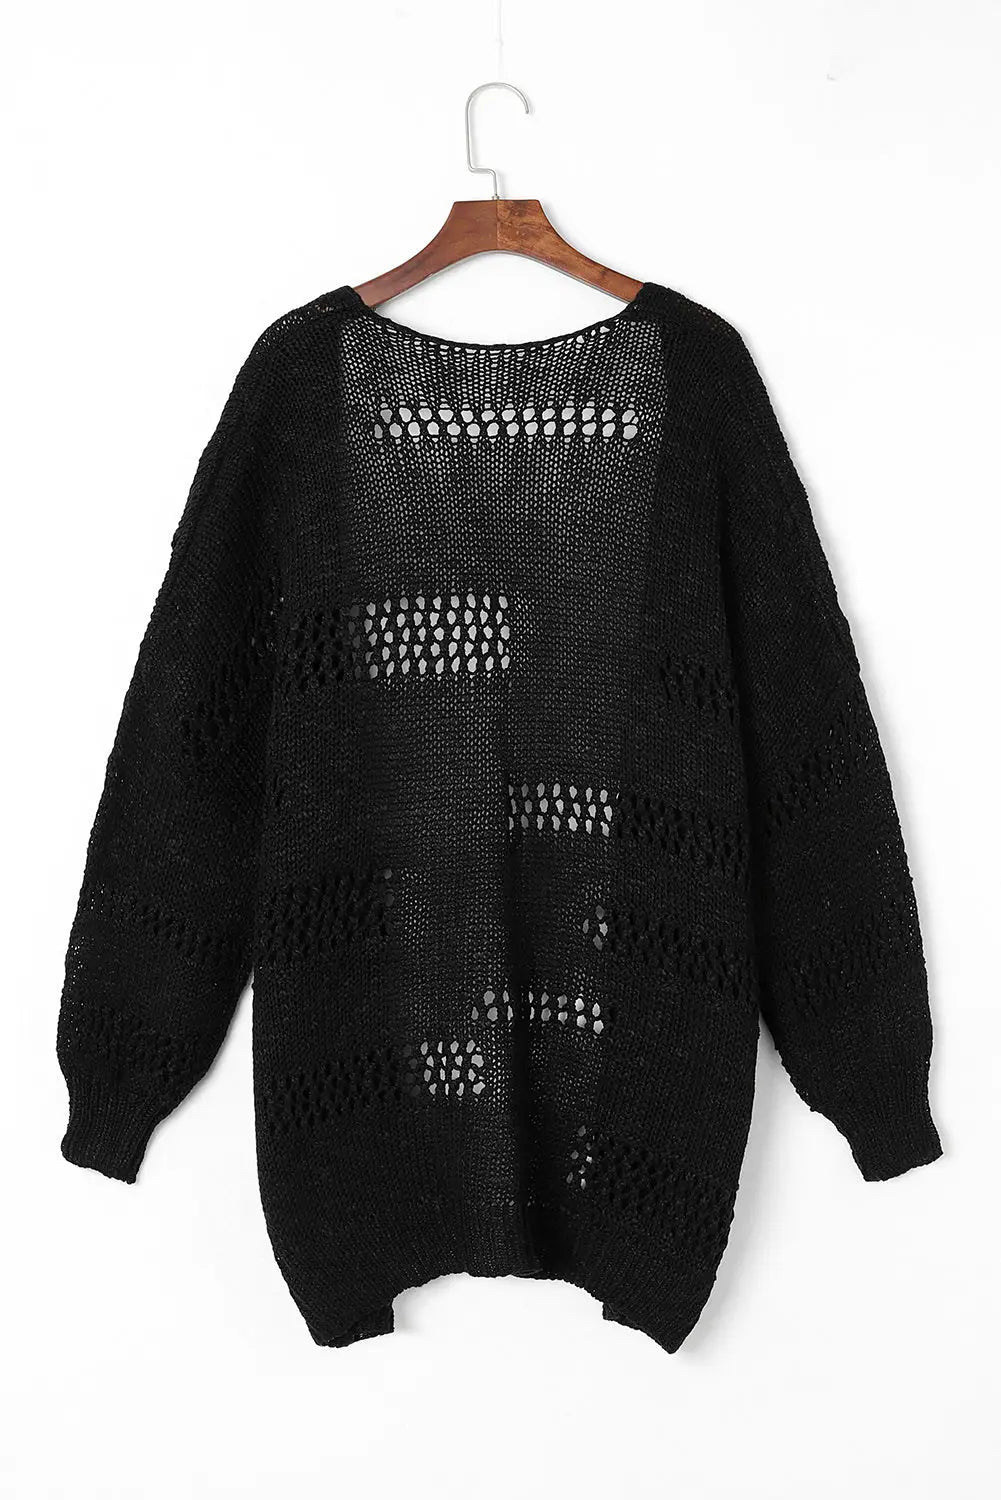 Black casual hollowed knit dolman sleeve cardigan - sweaters & cardigans